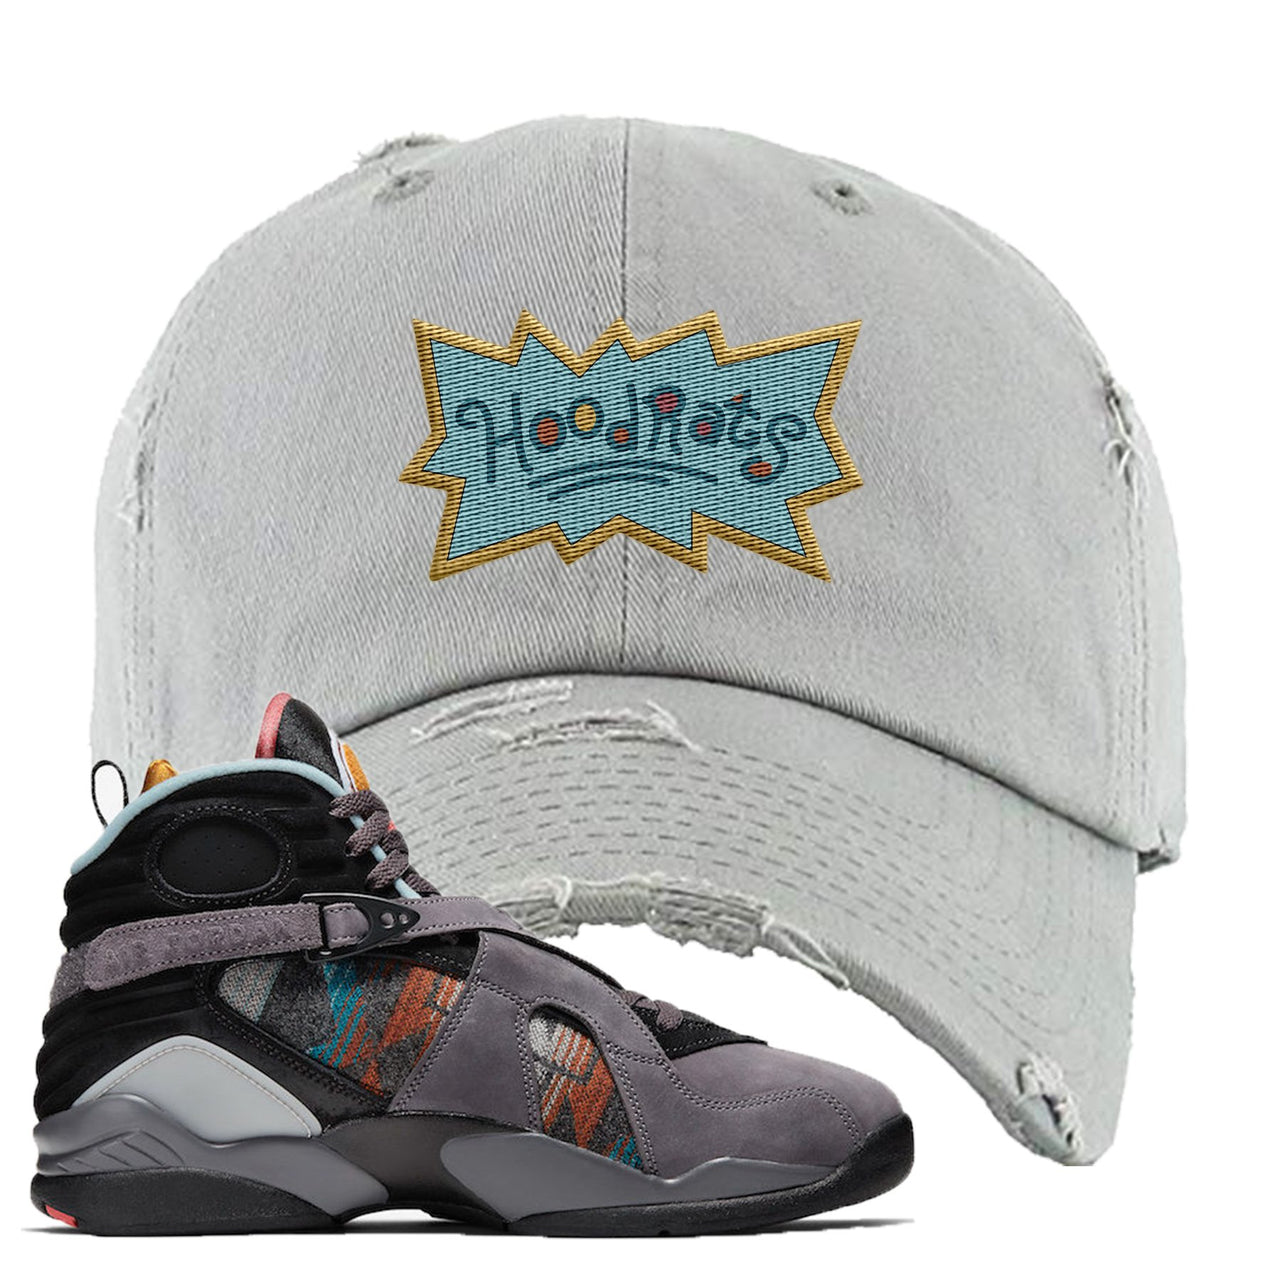 Jordan 8 N7 Pendleton Hood Rats Light Gray Sneaker Hook Up Distressed Dad Hat